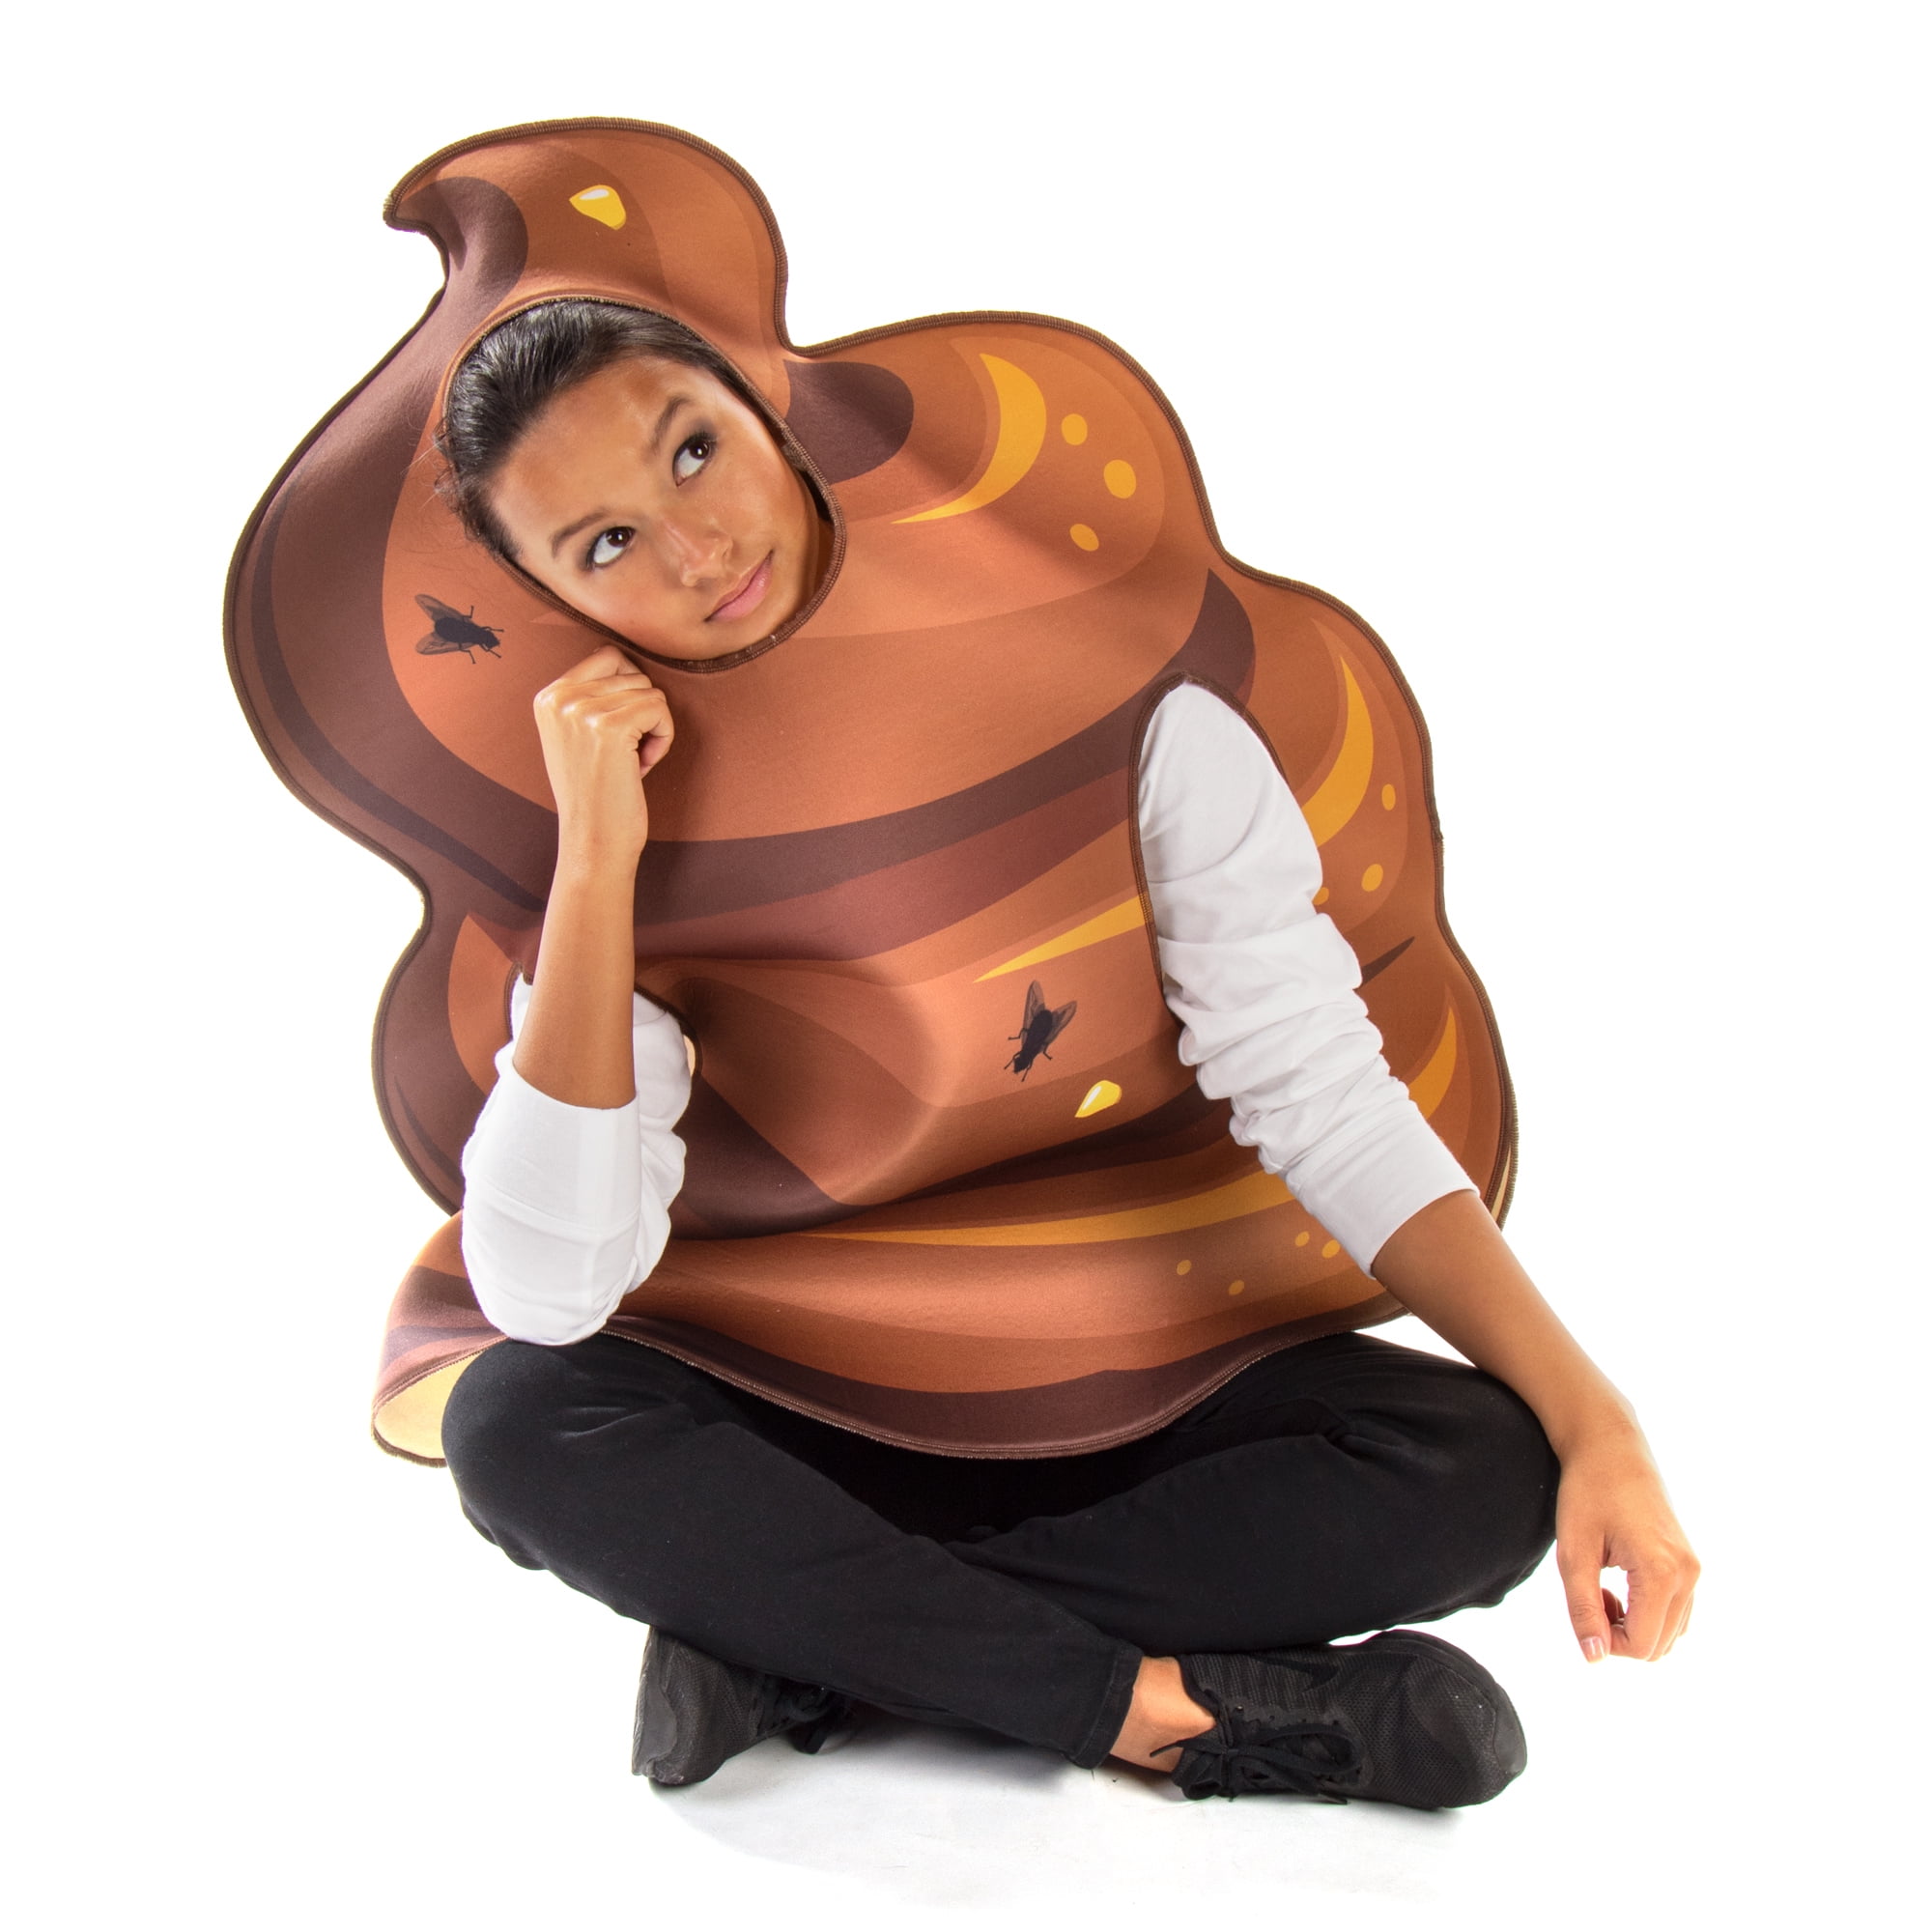 Corn Poop Halloween Costume - Funny Poo Emoji Gross Humor One-Size Adult Outfit Multicolored - Walmart.com